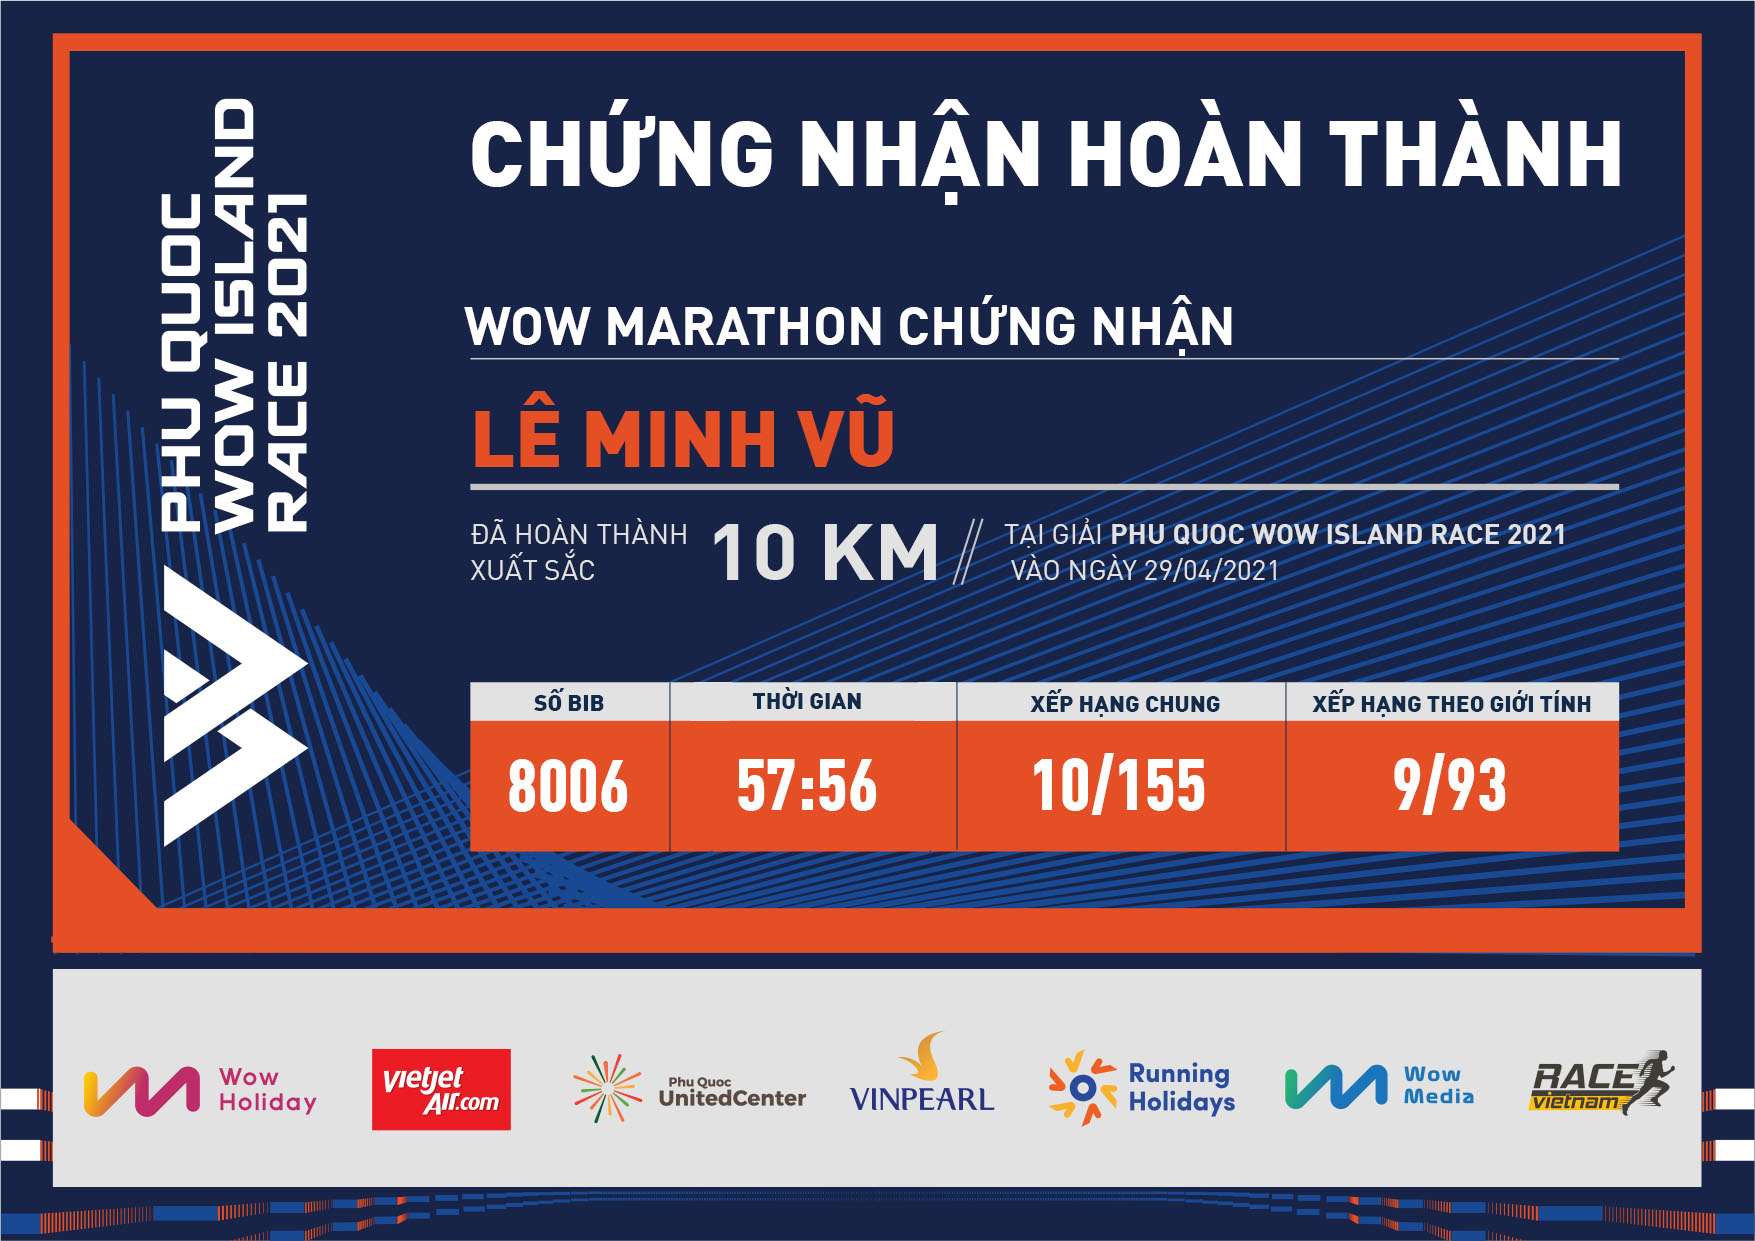 8006 - Lê Minh Vũ